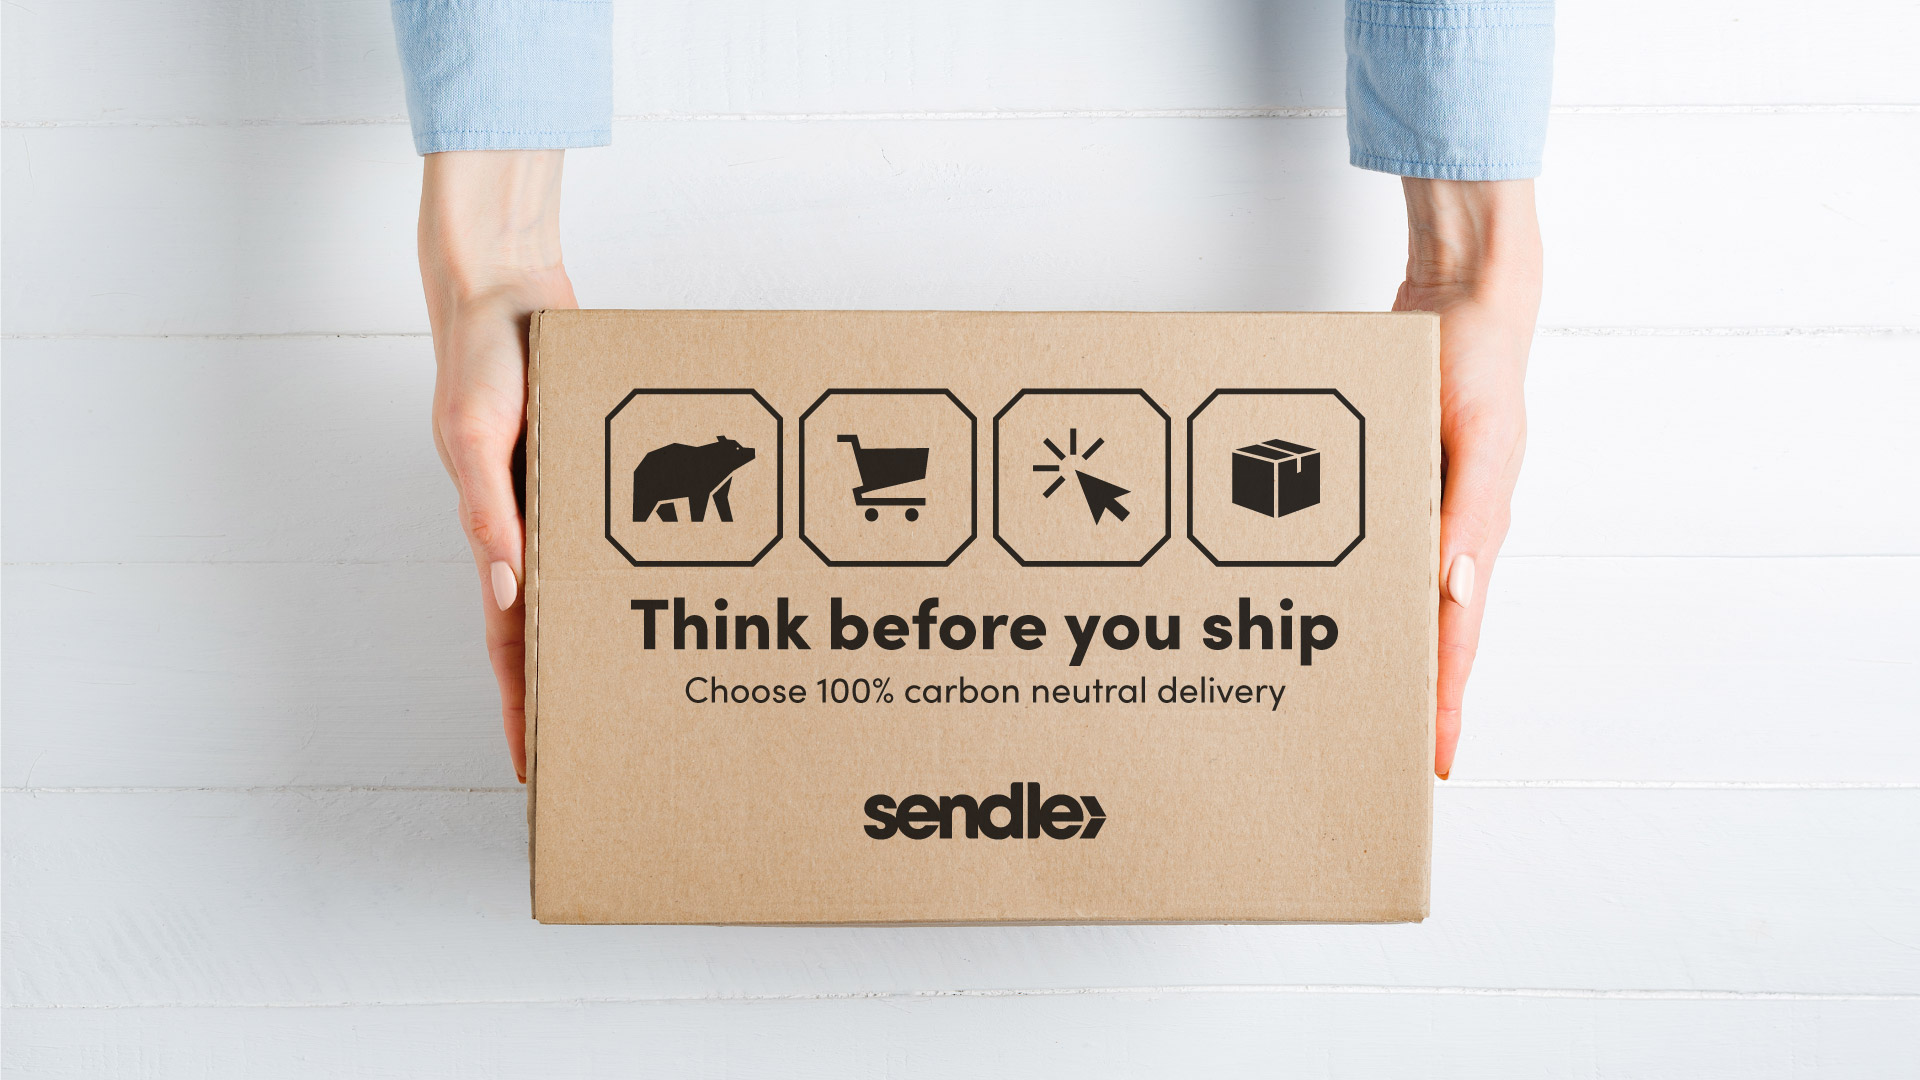 sendle-cardboard-box-with-logos